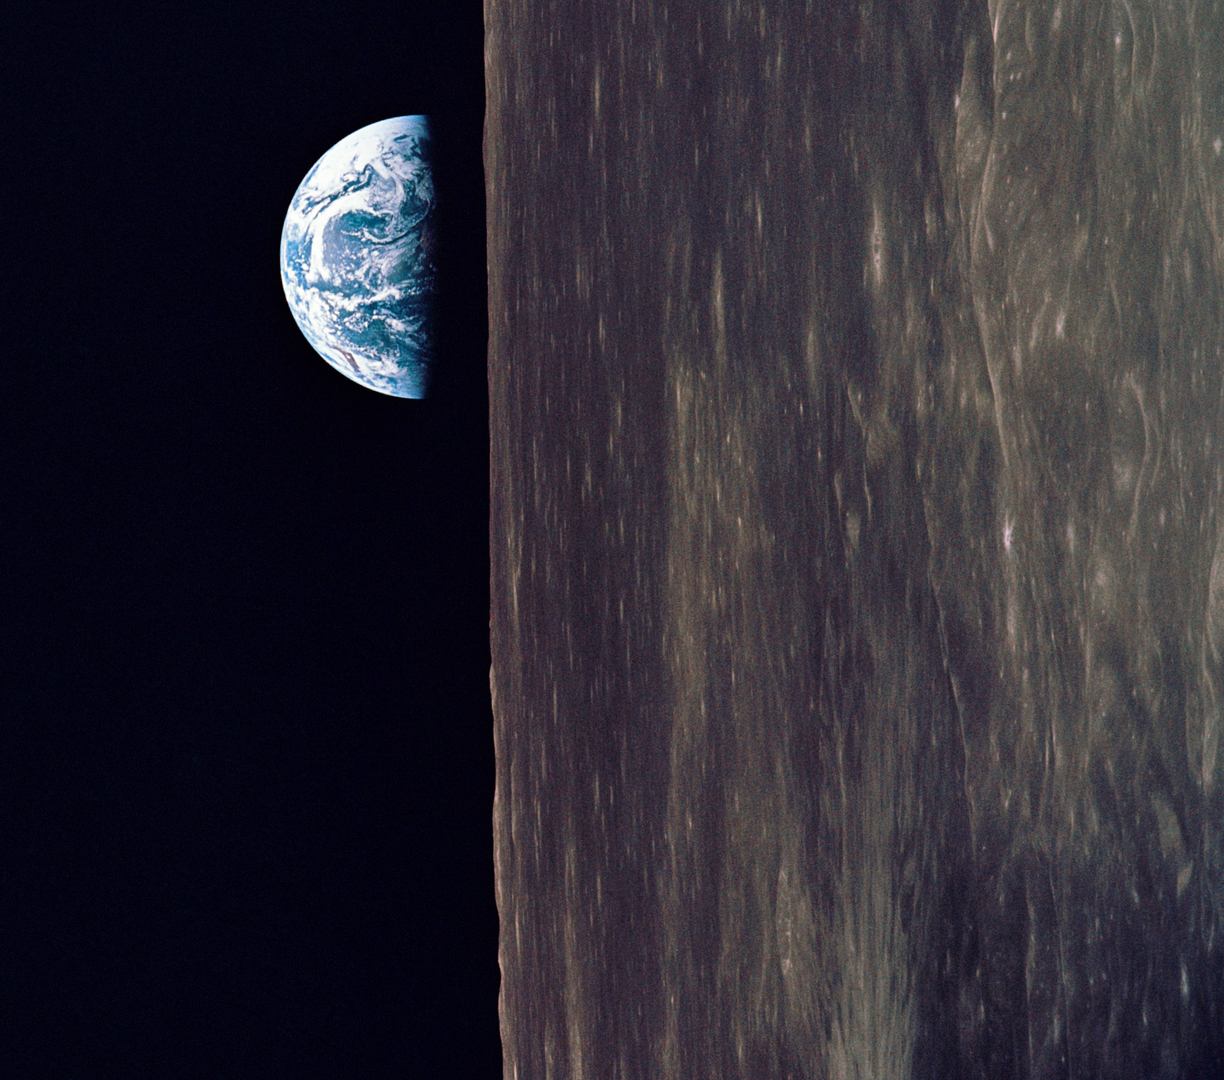 Earth Rise by NASA